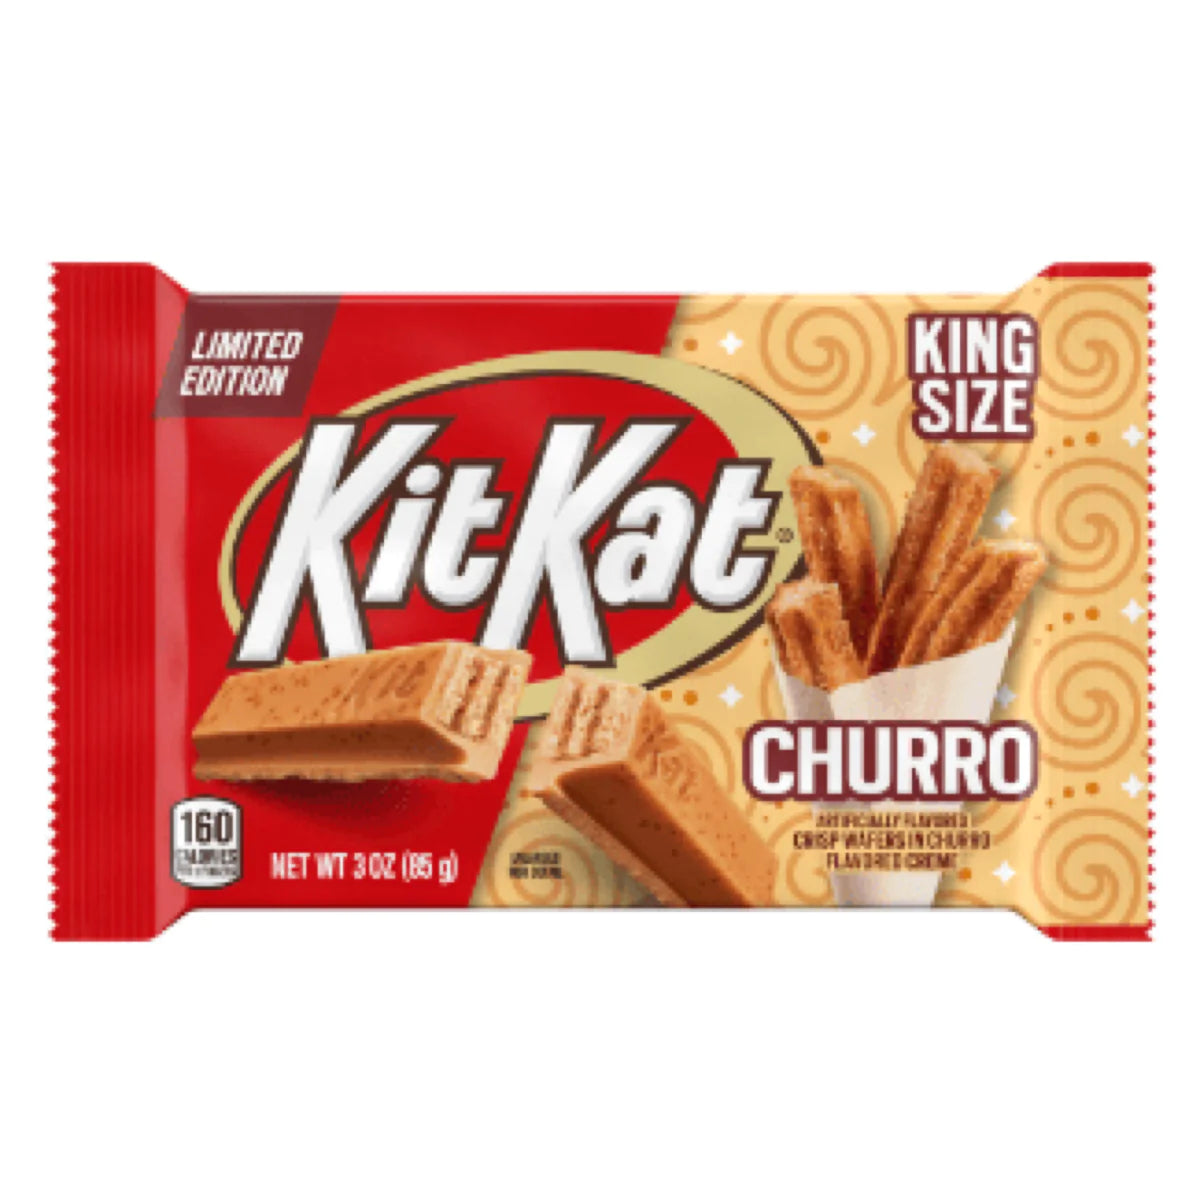 Kitkat churros